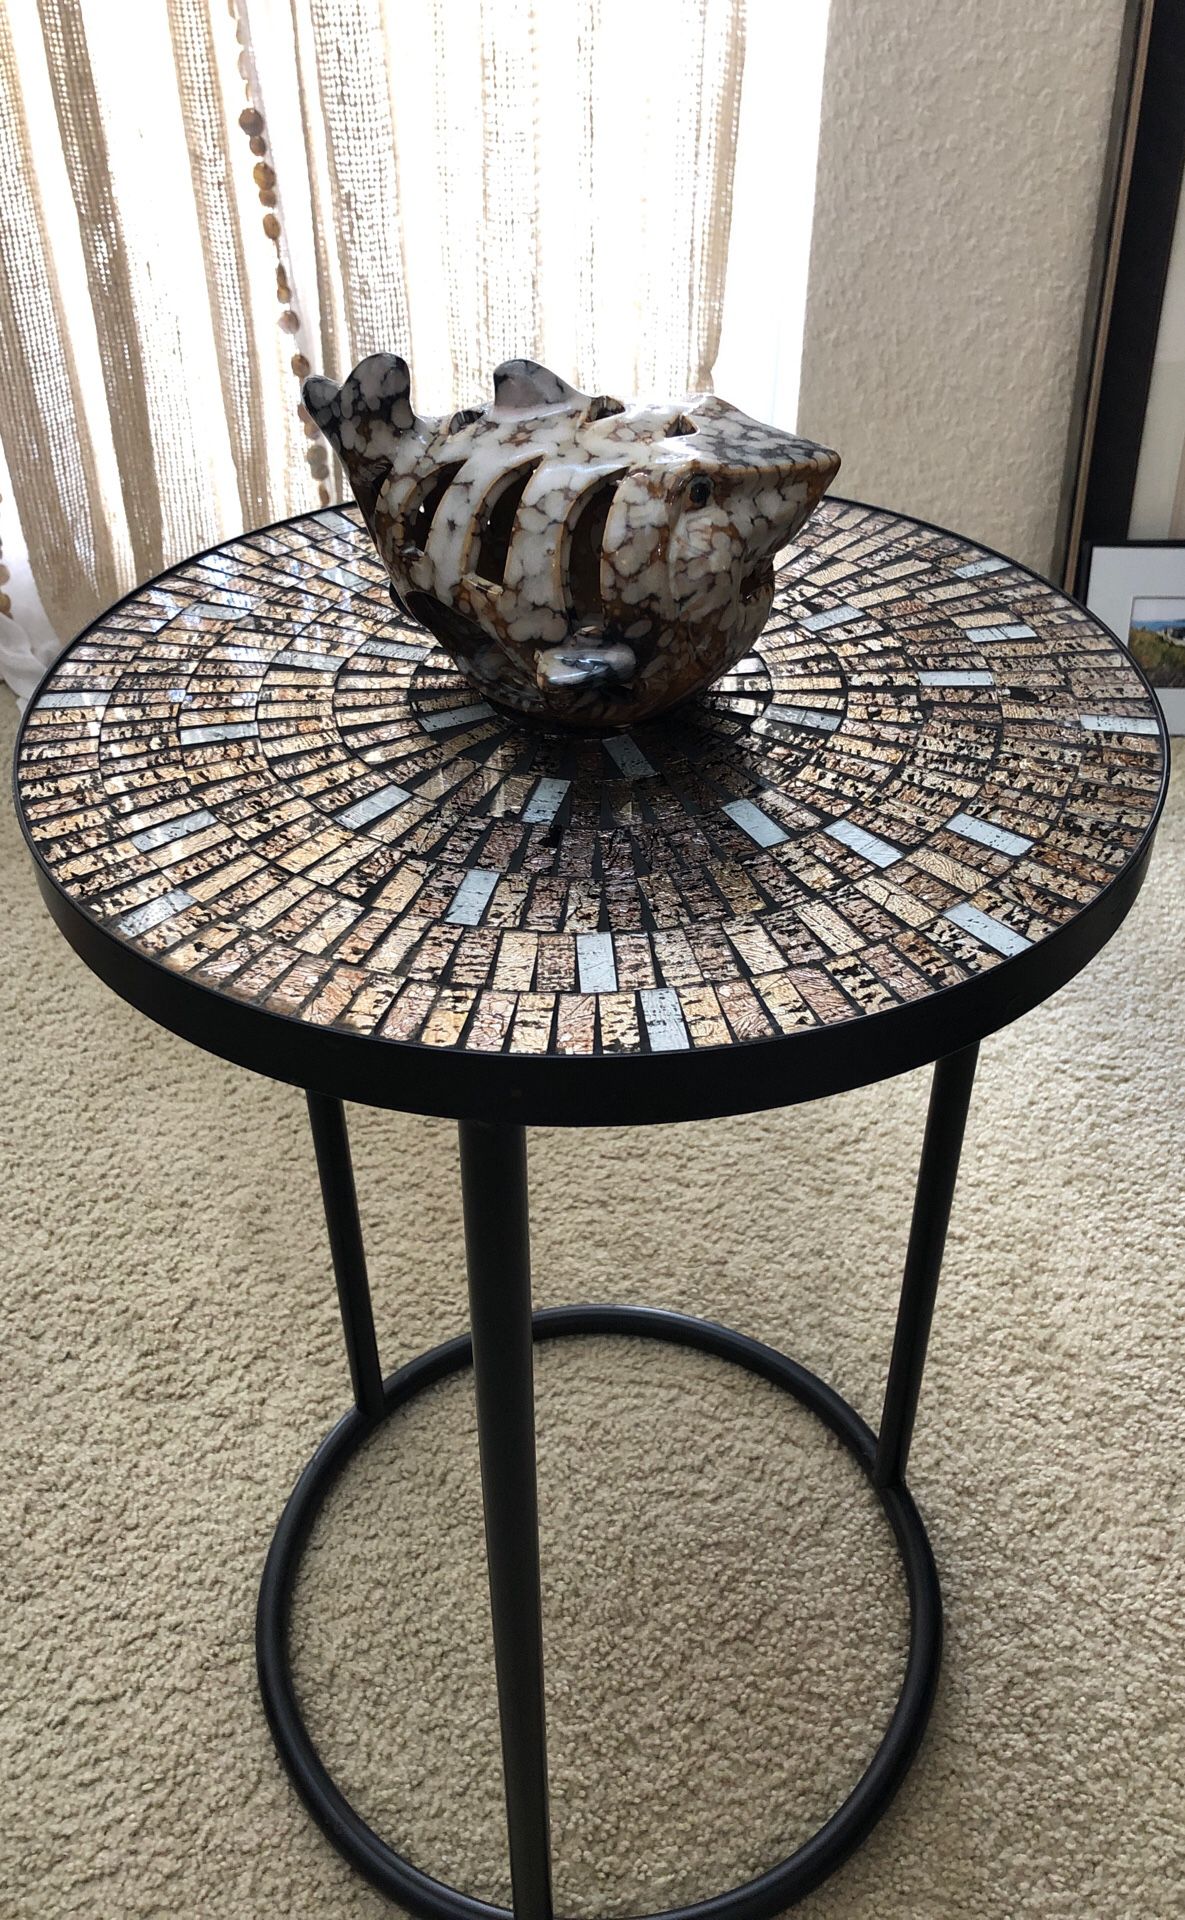 Decorative table